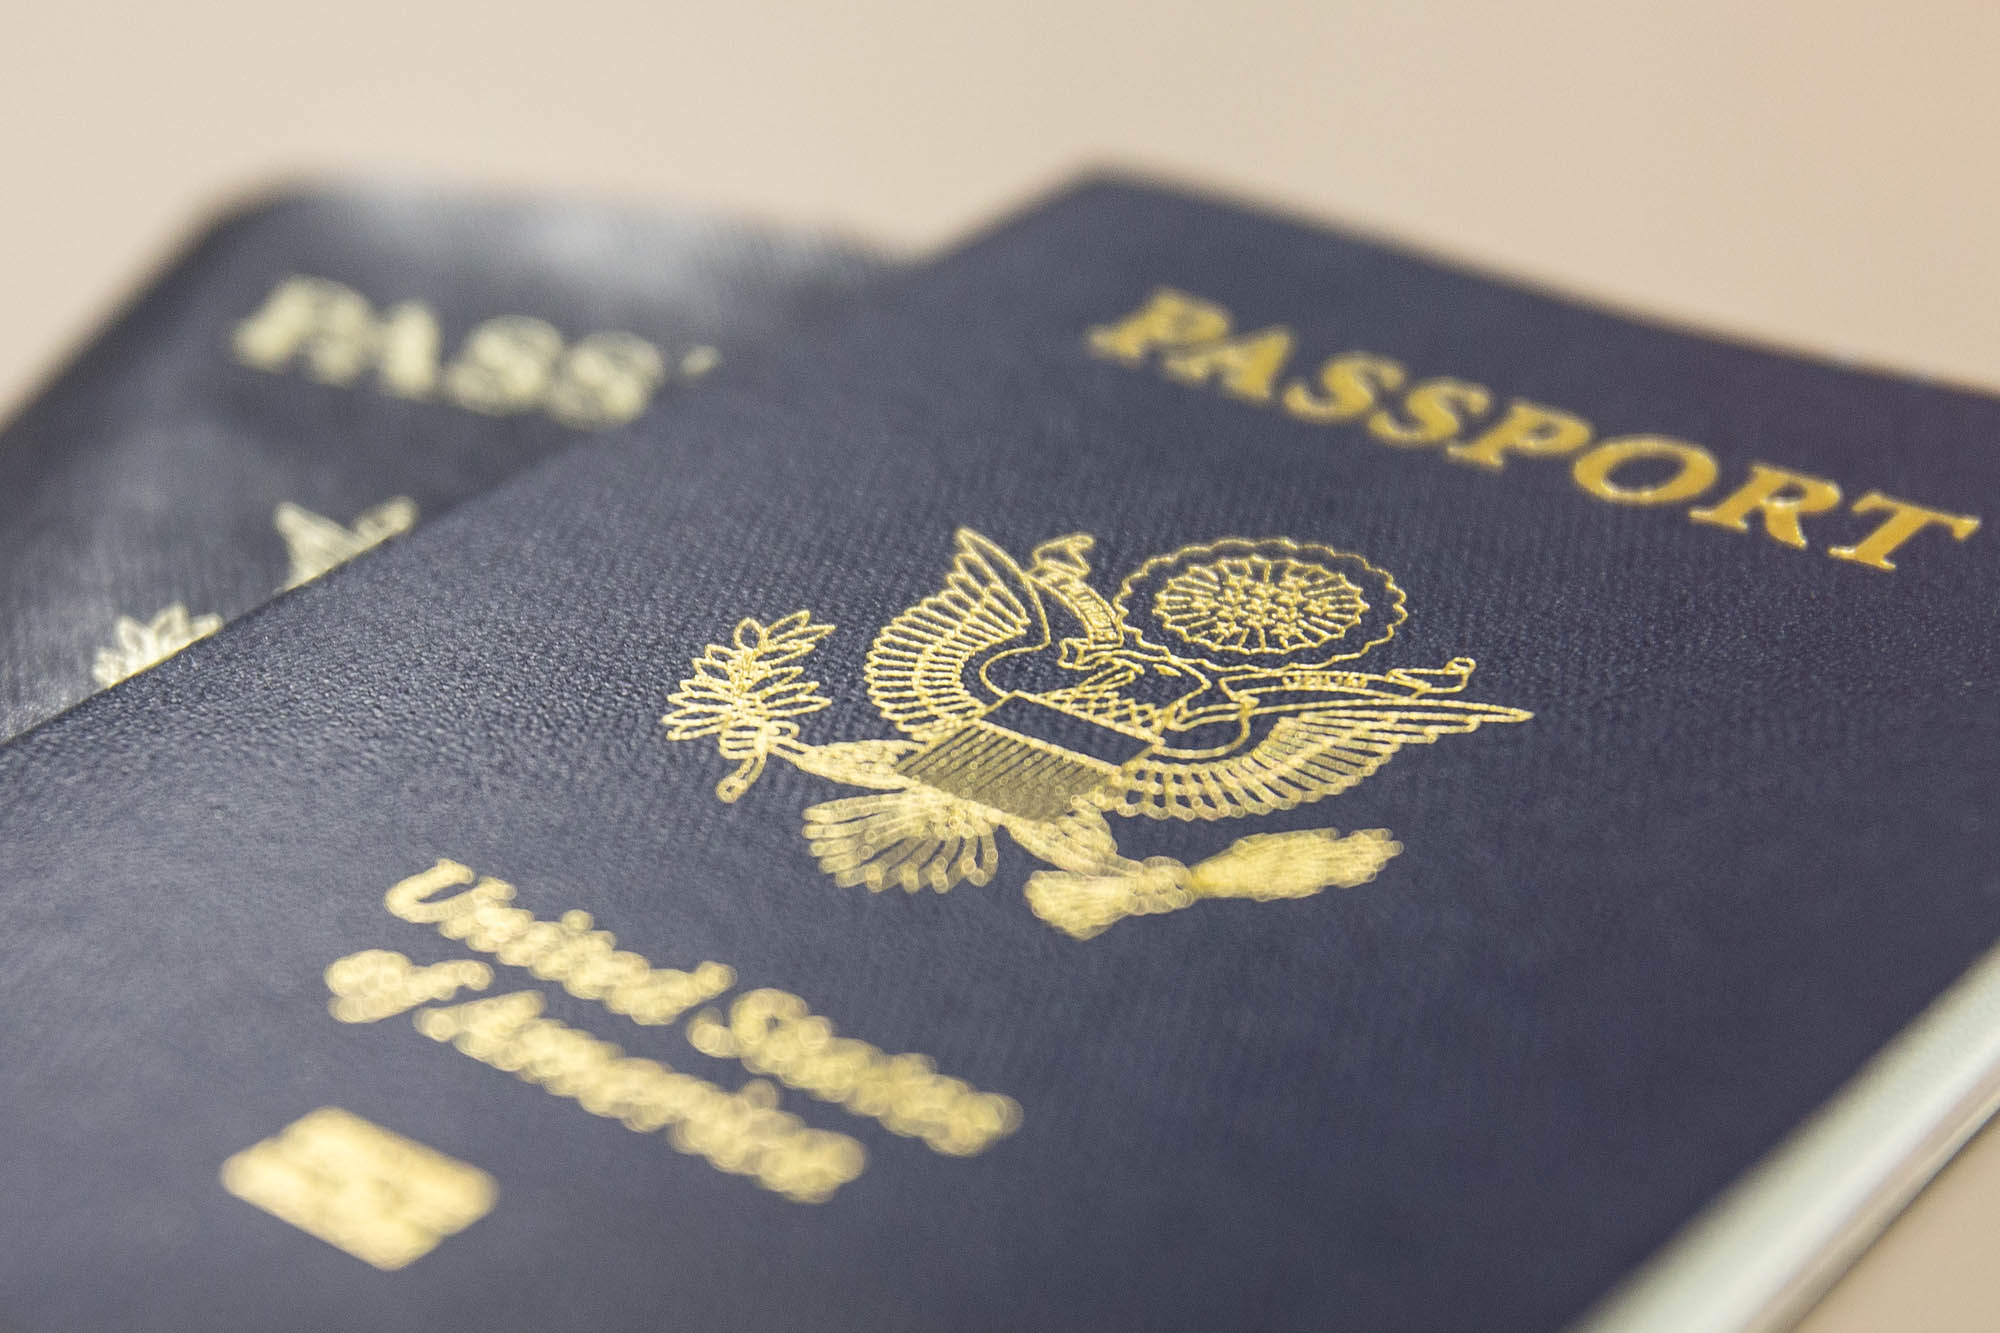 United States of America's passport